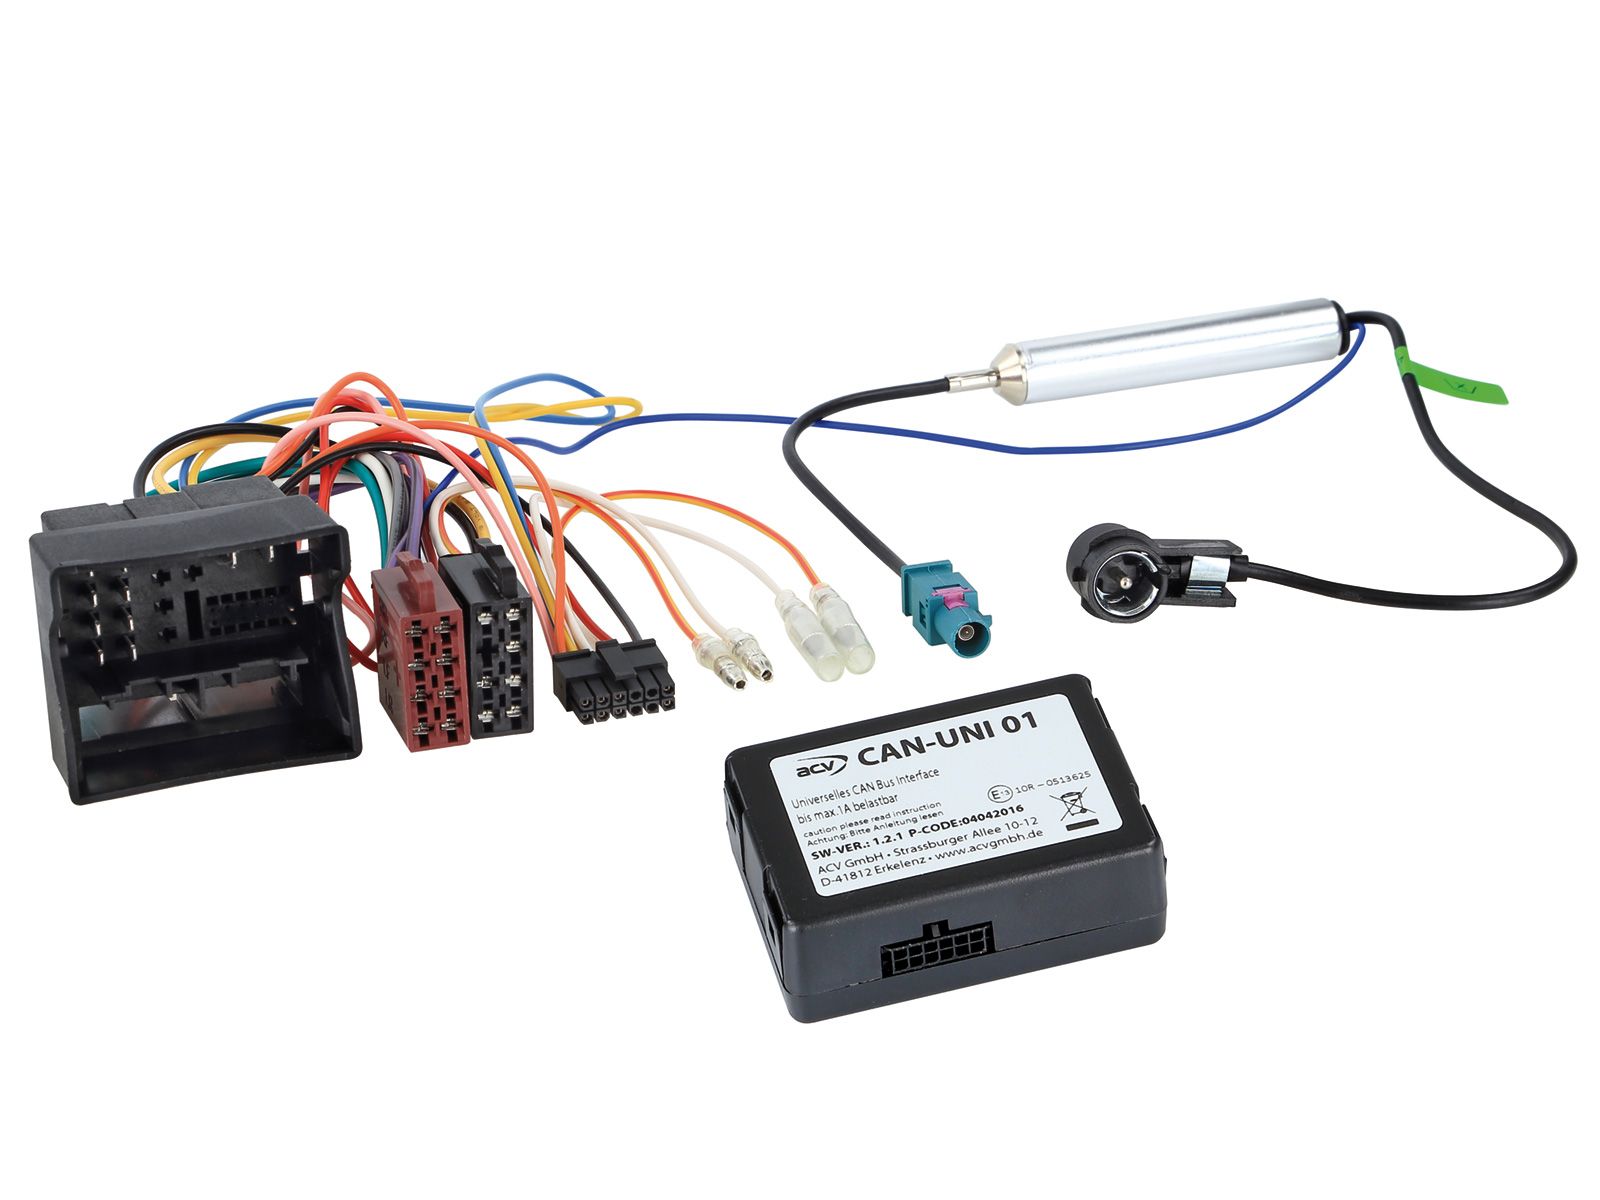 Seat Leon Antennenadapter DIN, Phantomspeisung + Stromversorgung - Car Hifi  Radio Adapter.eu